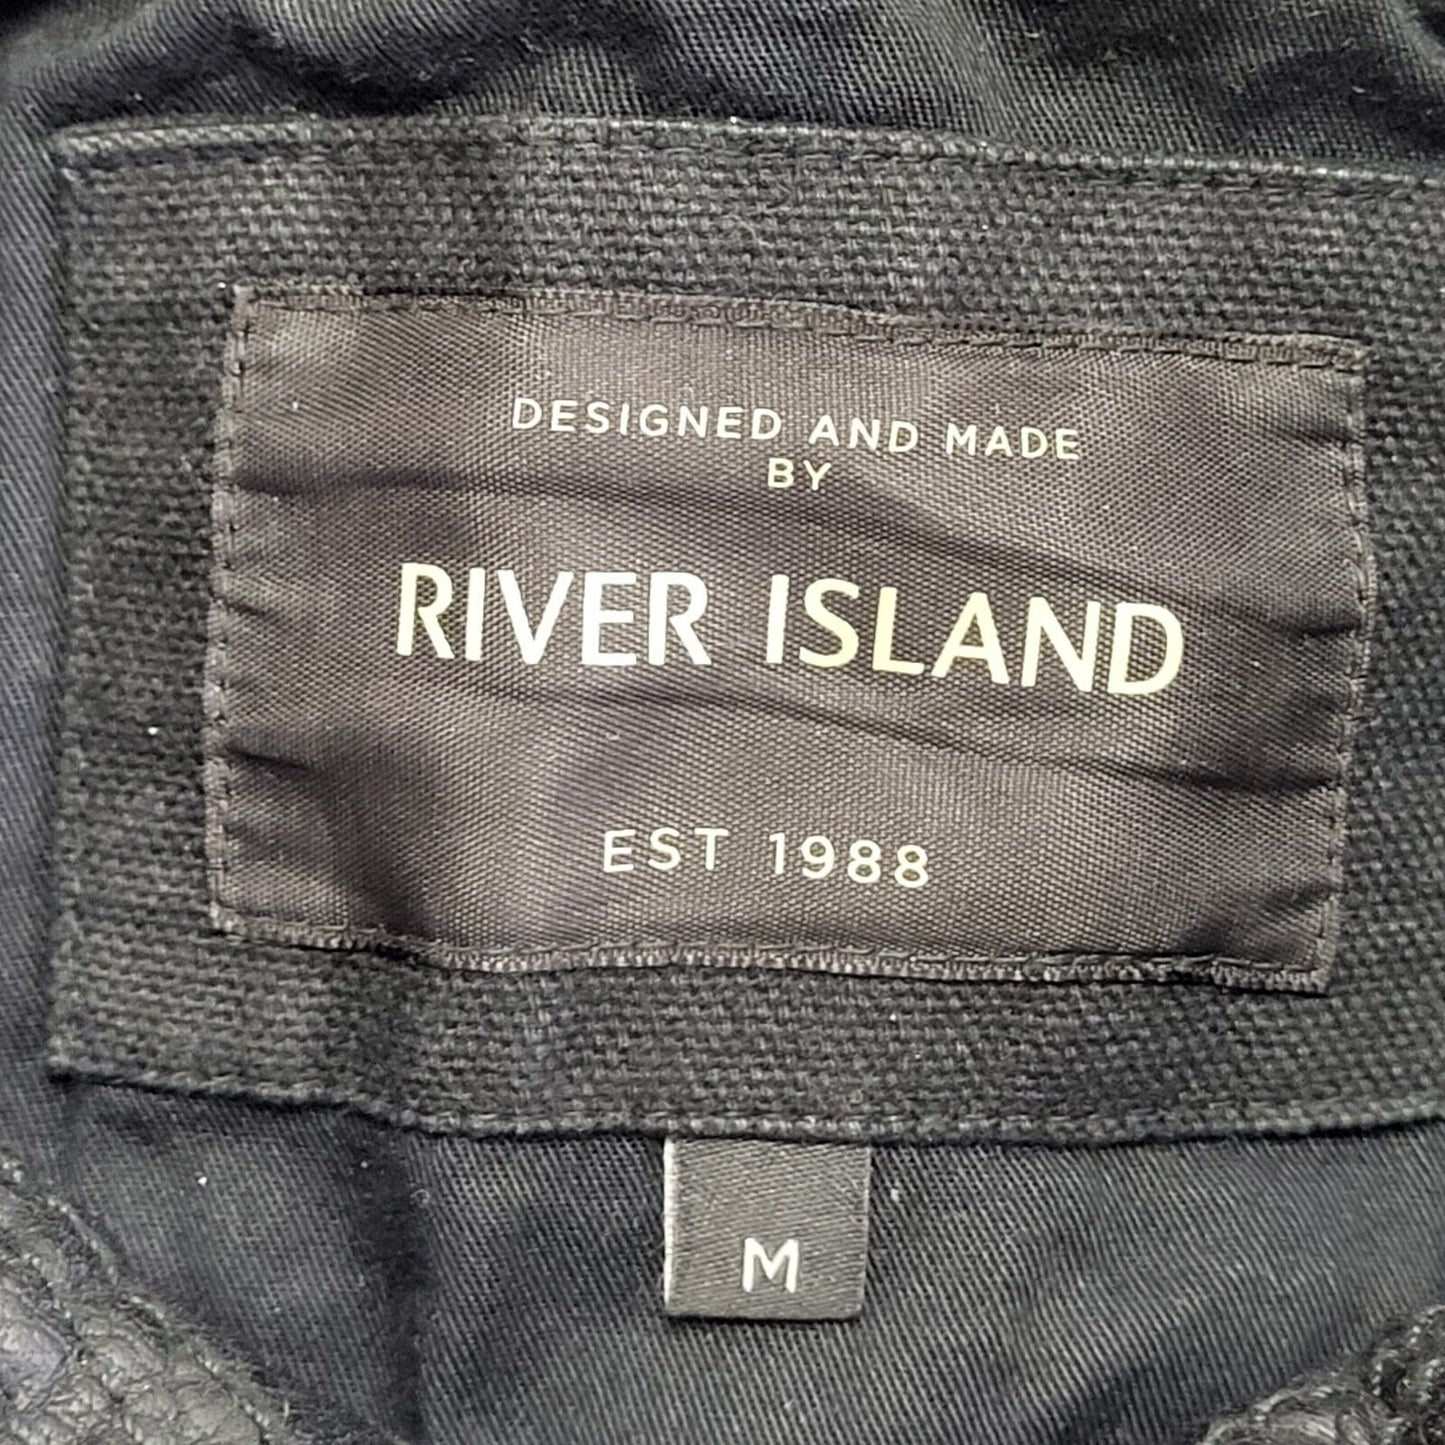 River Island Jacket (M)